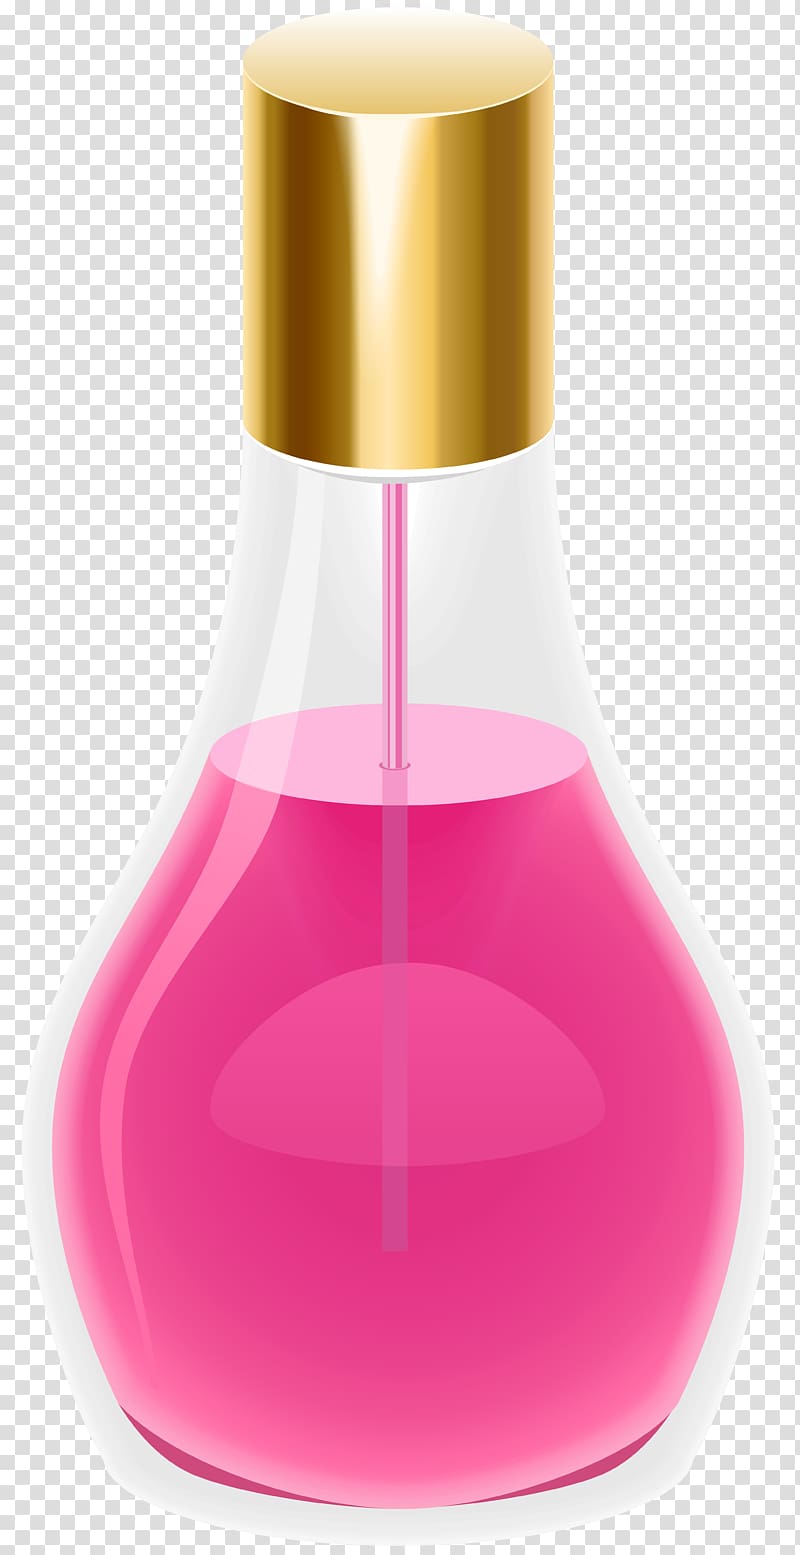 clear and gold fragrance bottle illustration, Glass bottle, Perfume Bottle transparent background PNG clipart